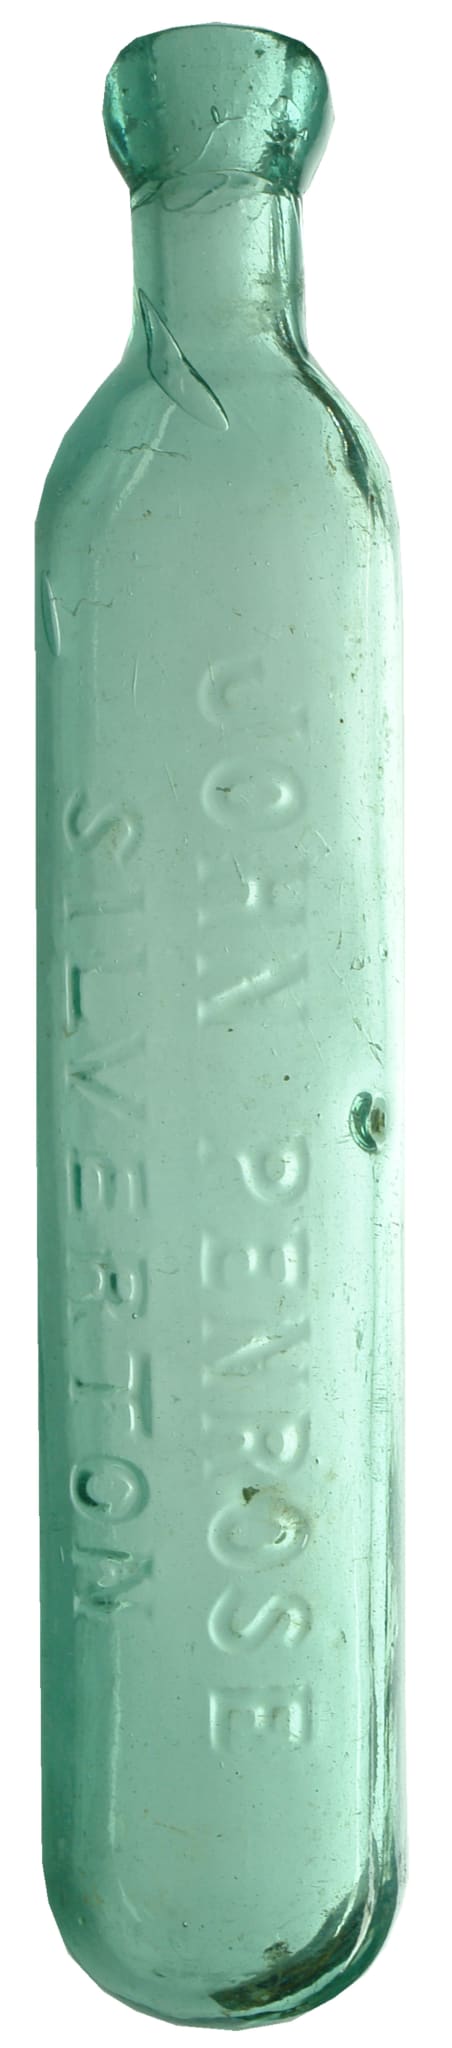 John Penrose Silverton Maugham Antique Bottle